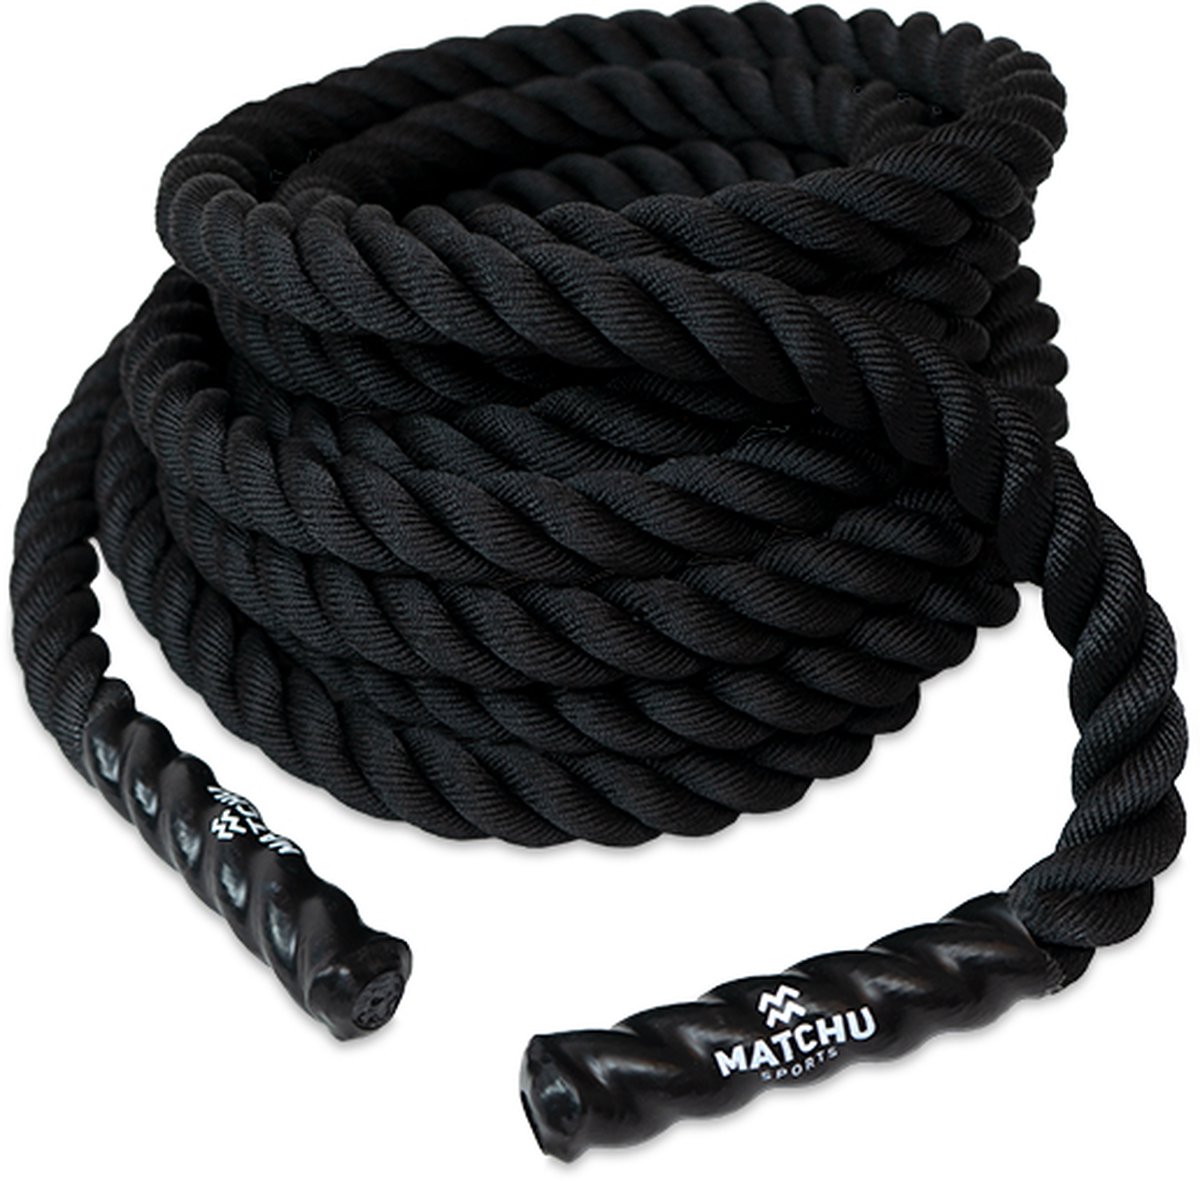 Monarch Kwik Sta op Matchu Sports - Battle rope - Fitness touw - HIIT training - 8KG - Cardio  training -... | bol.com